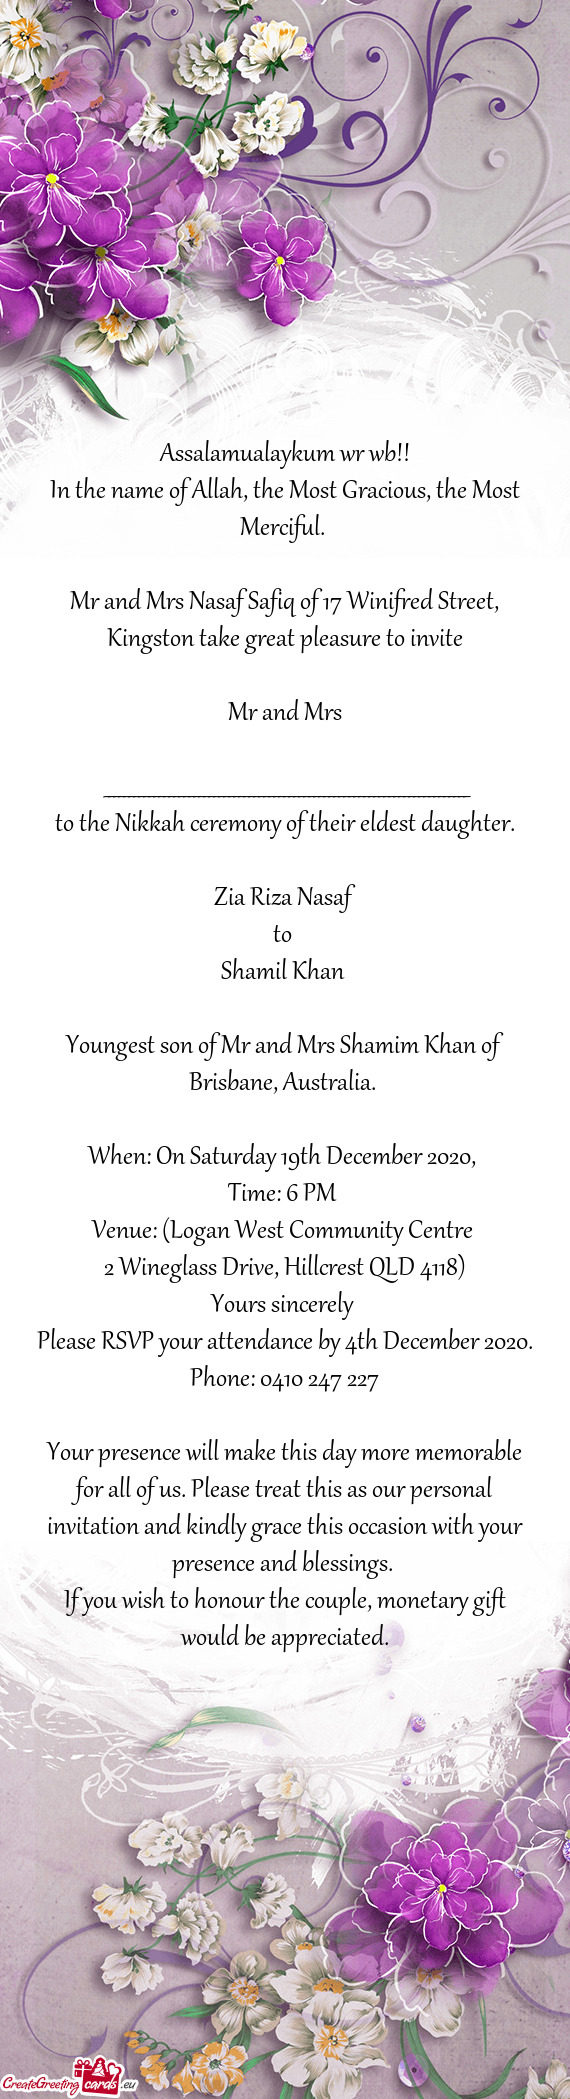 Mr and Mrs Nasaf Safiq of 17 Winifred Street, Kingston take great pleasure to invite